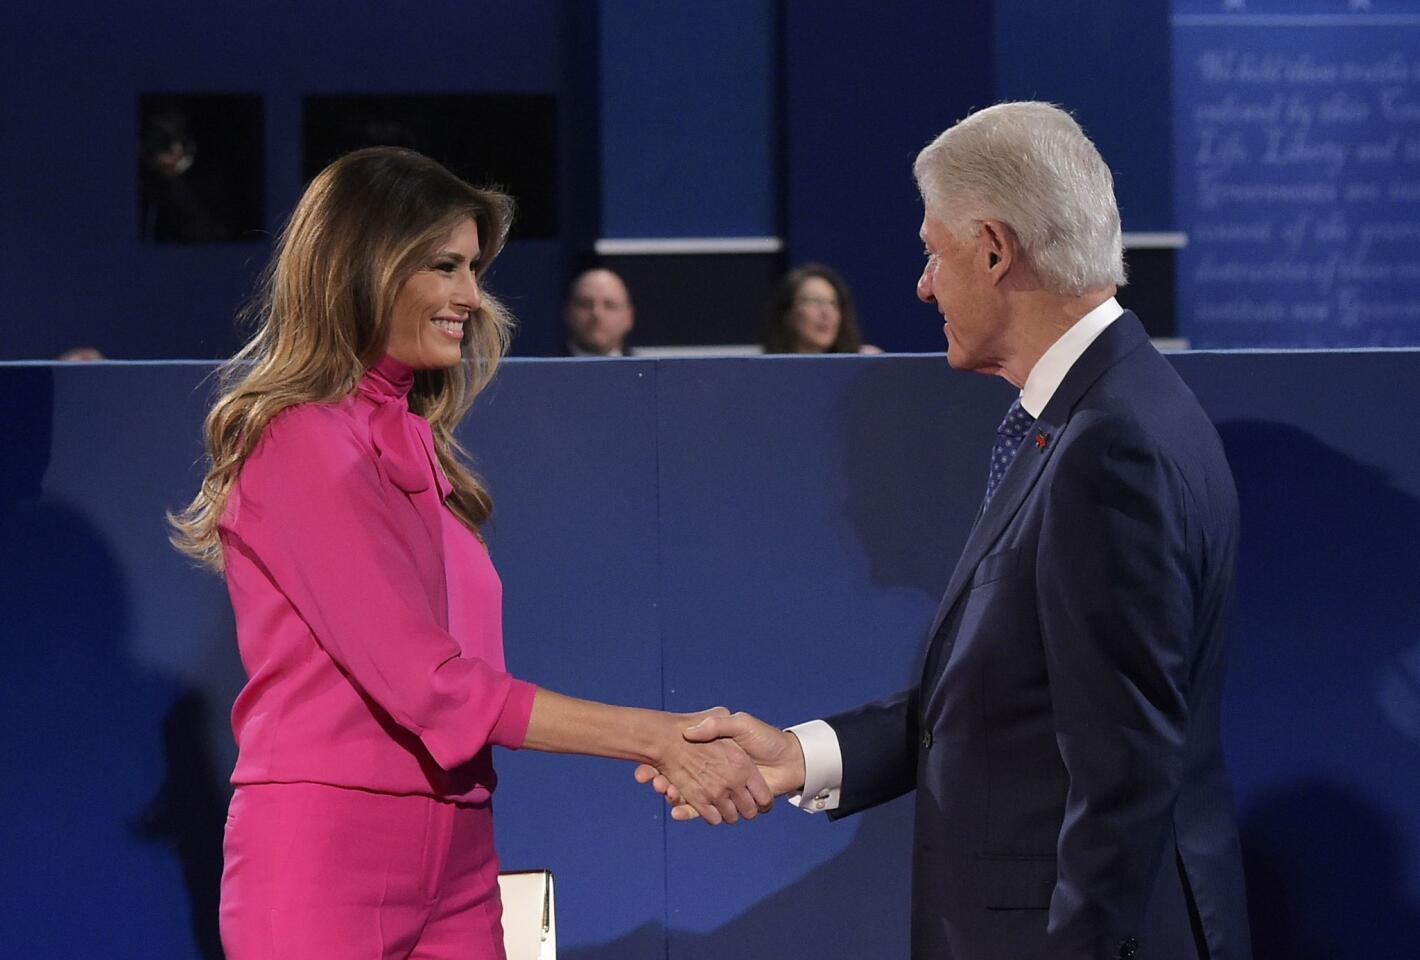 Melania shakes hands with Bill Clinton